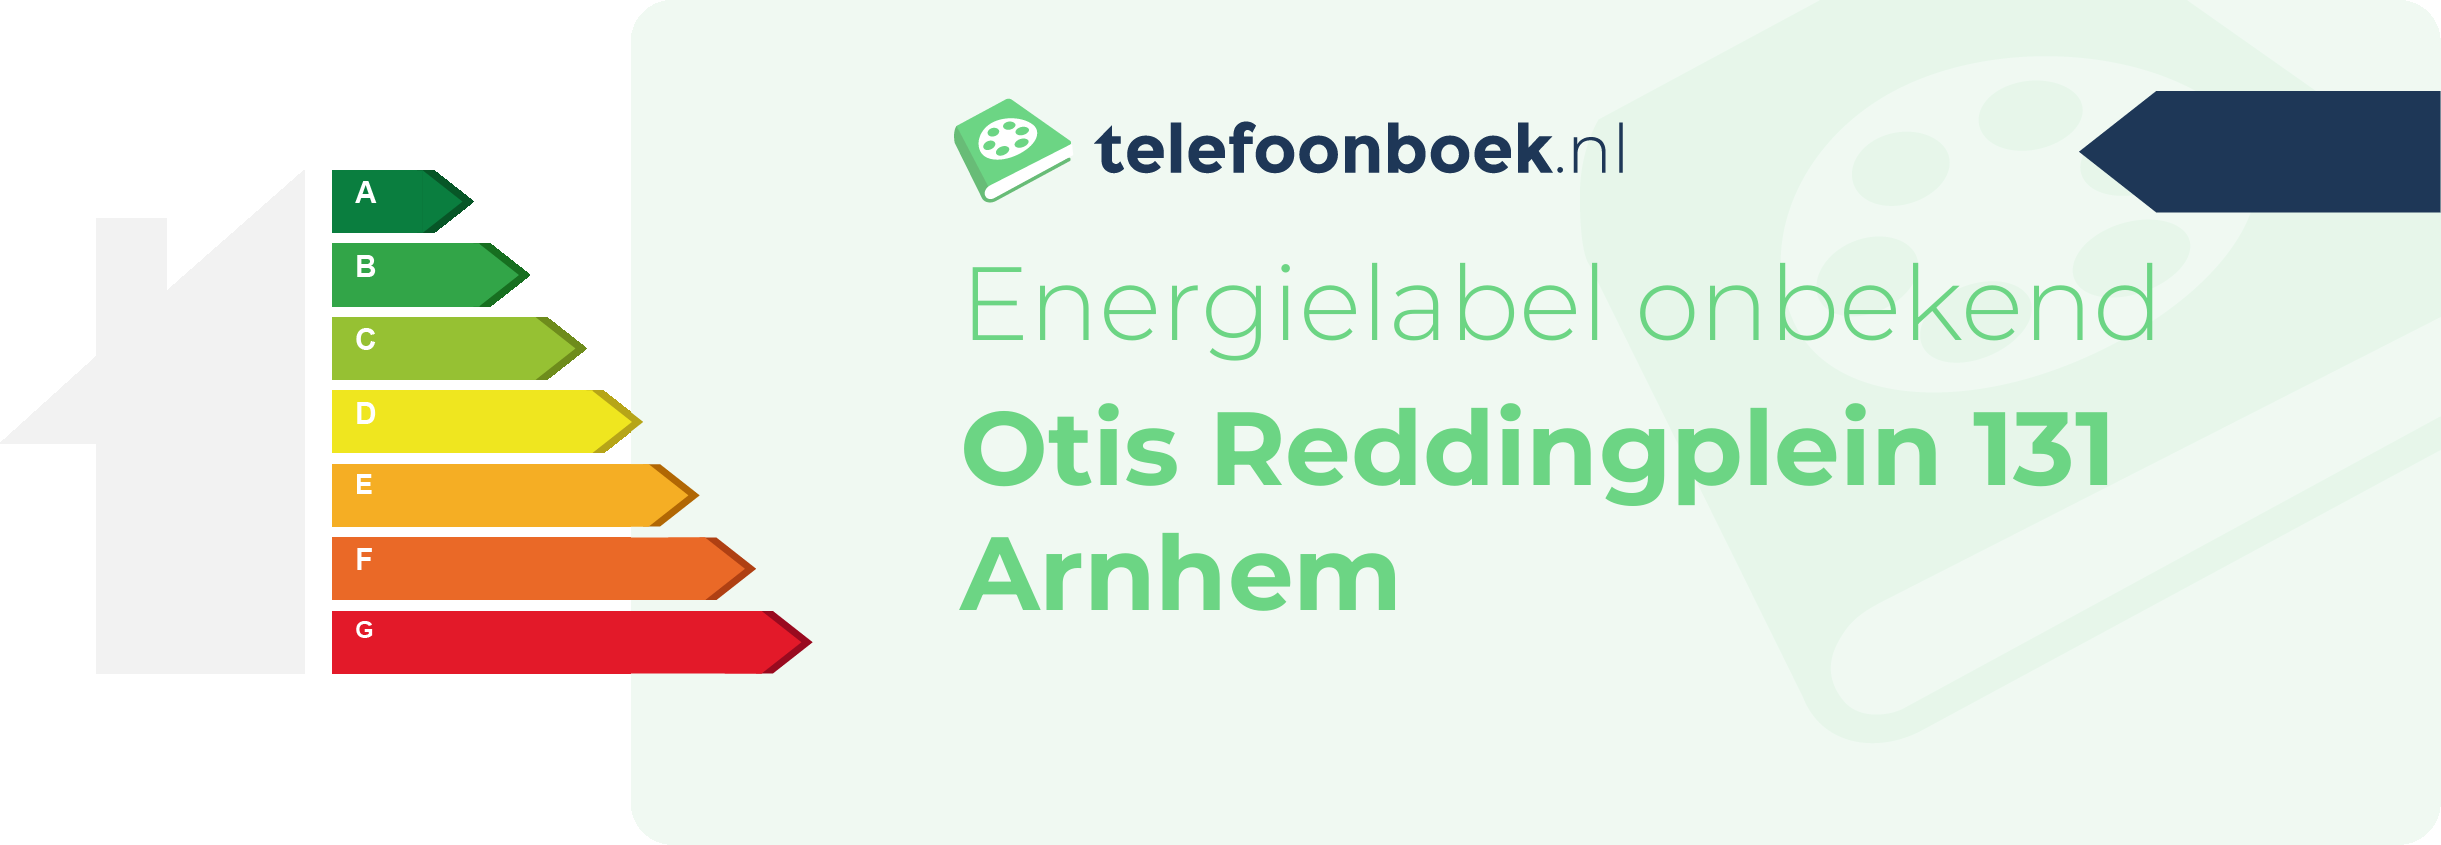 Energielabel Otis Reddingplein 131 Arnhem